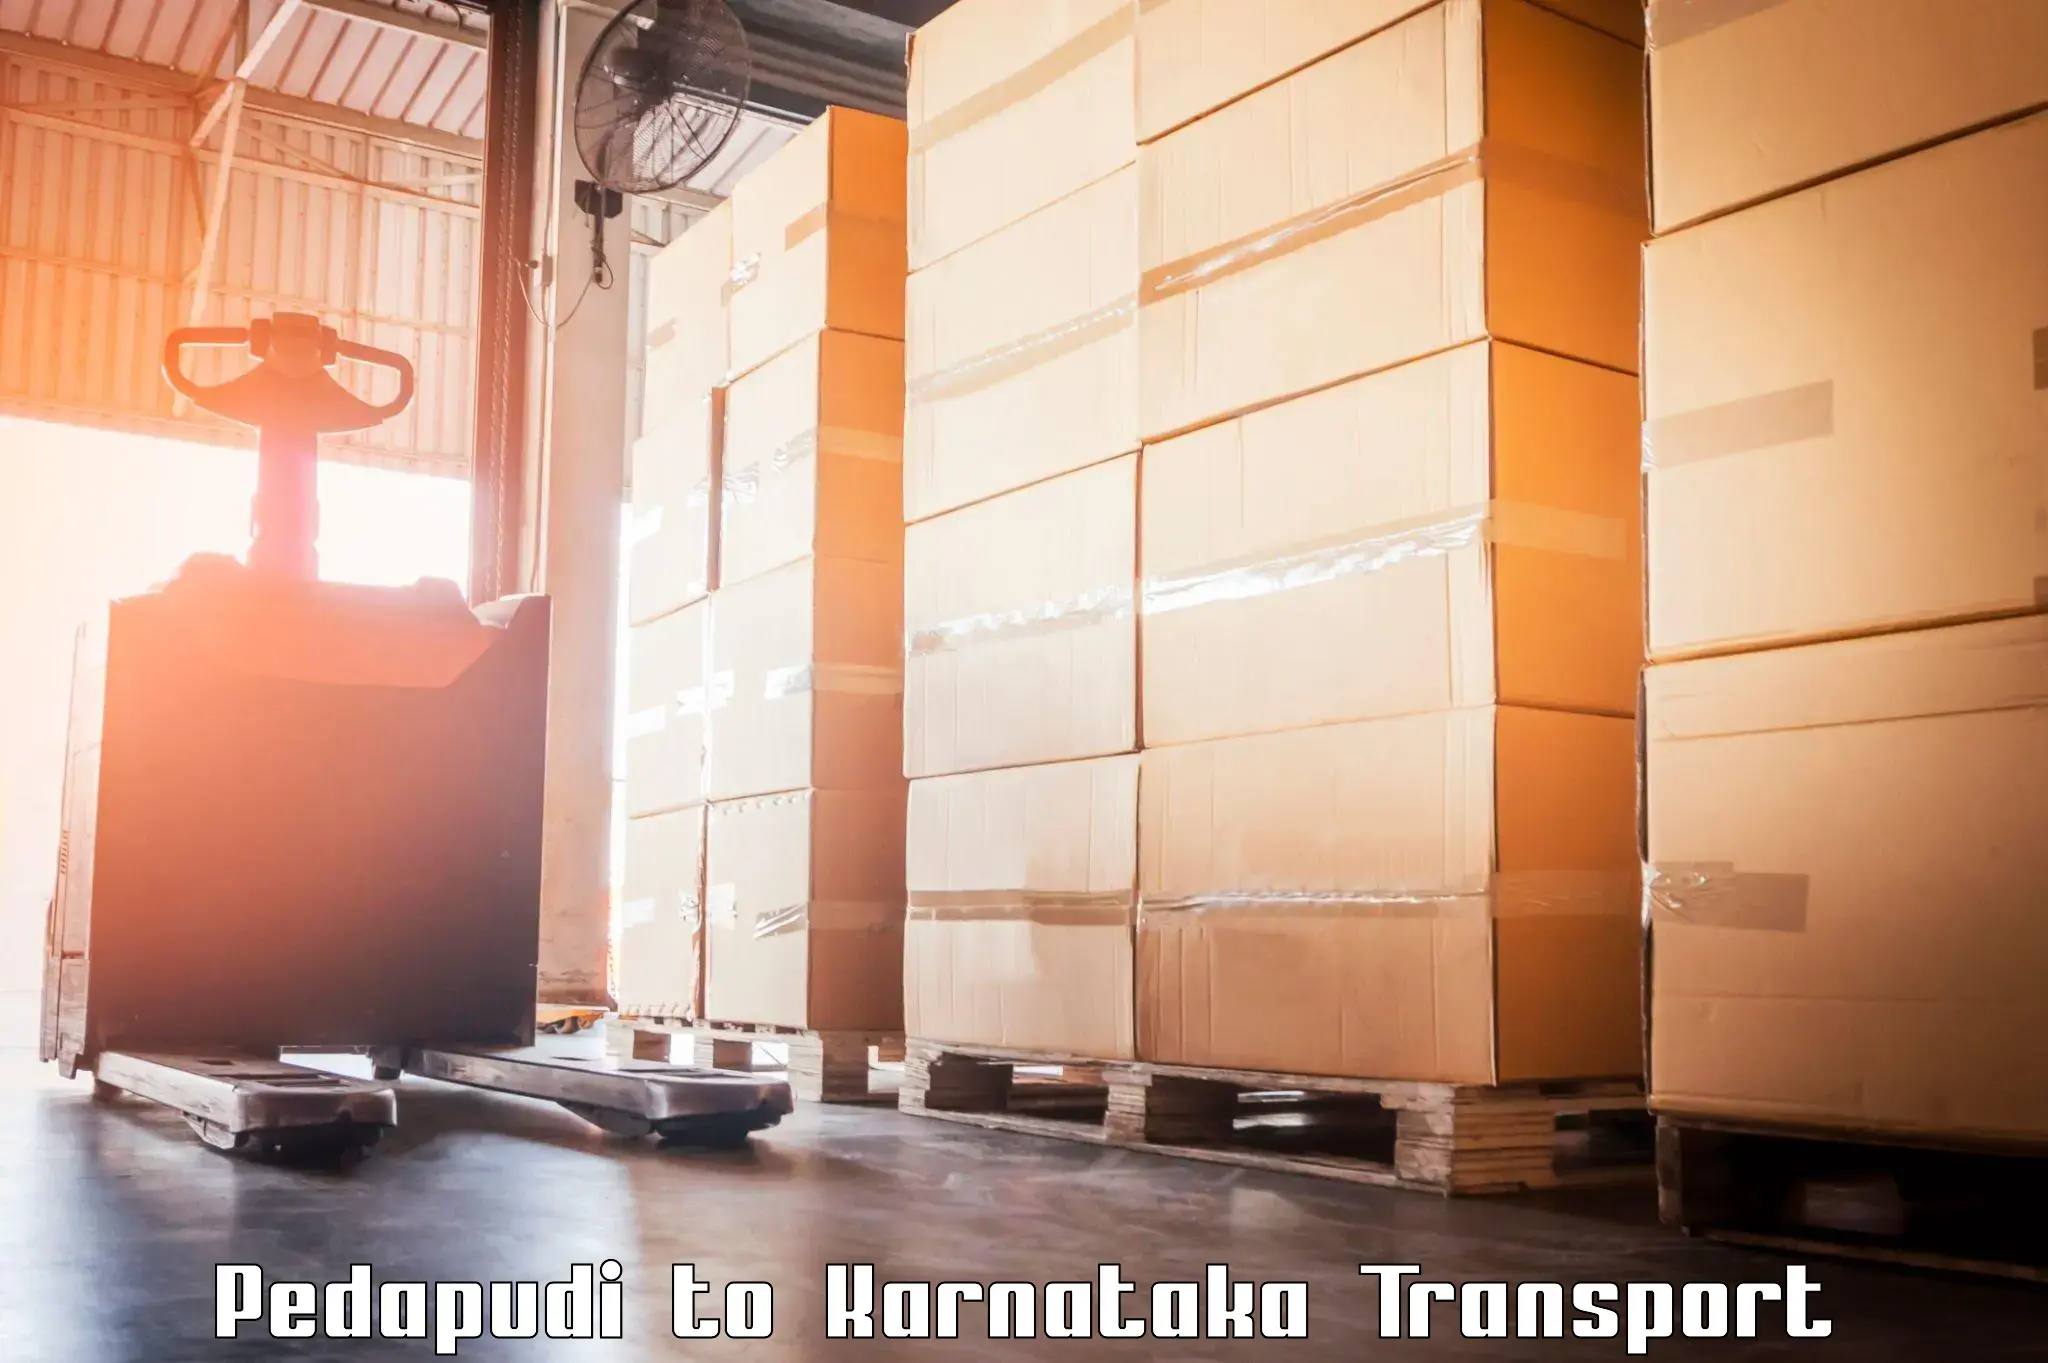 India truck logistics services Pedapudi to Mysore